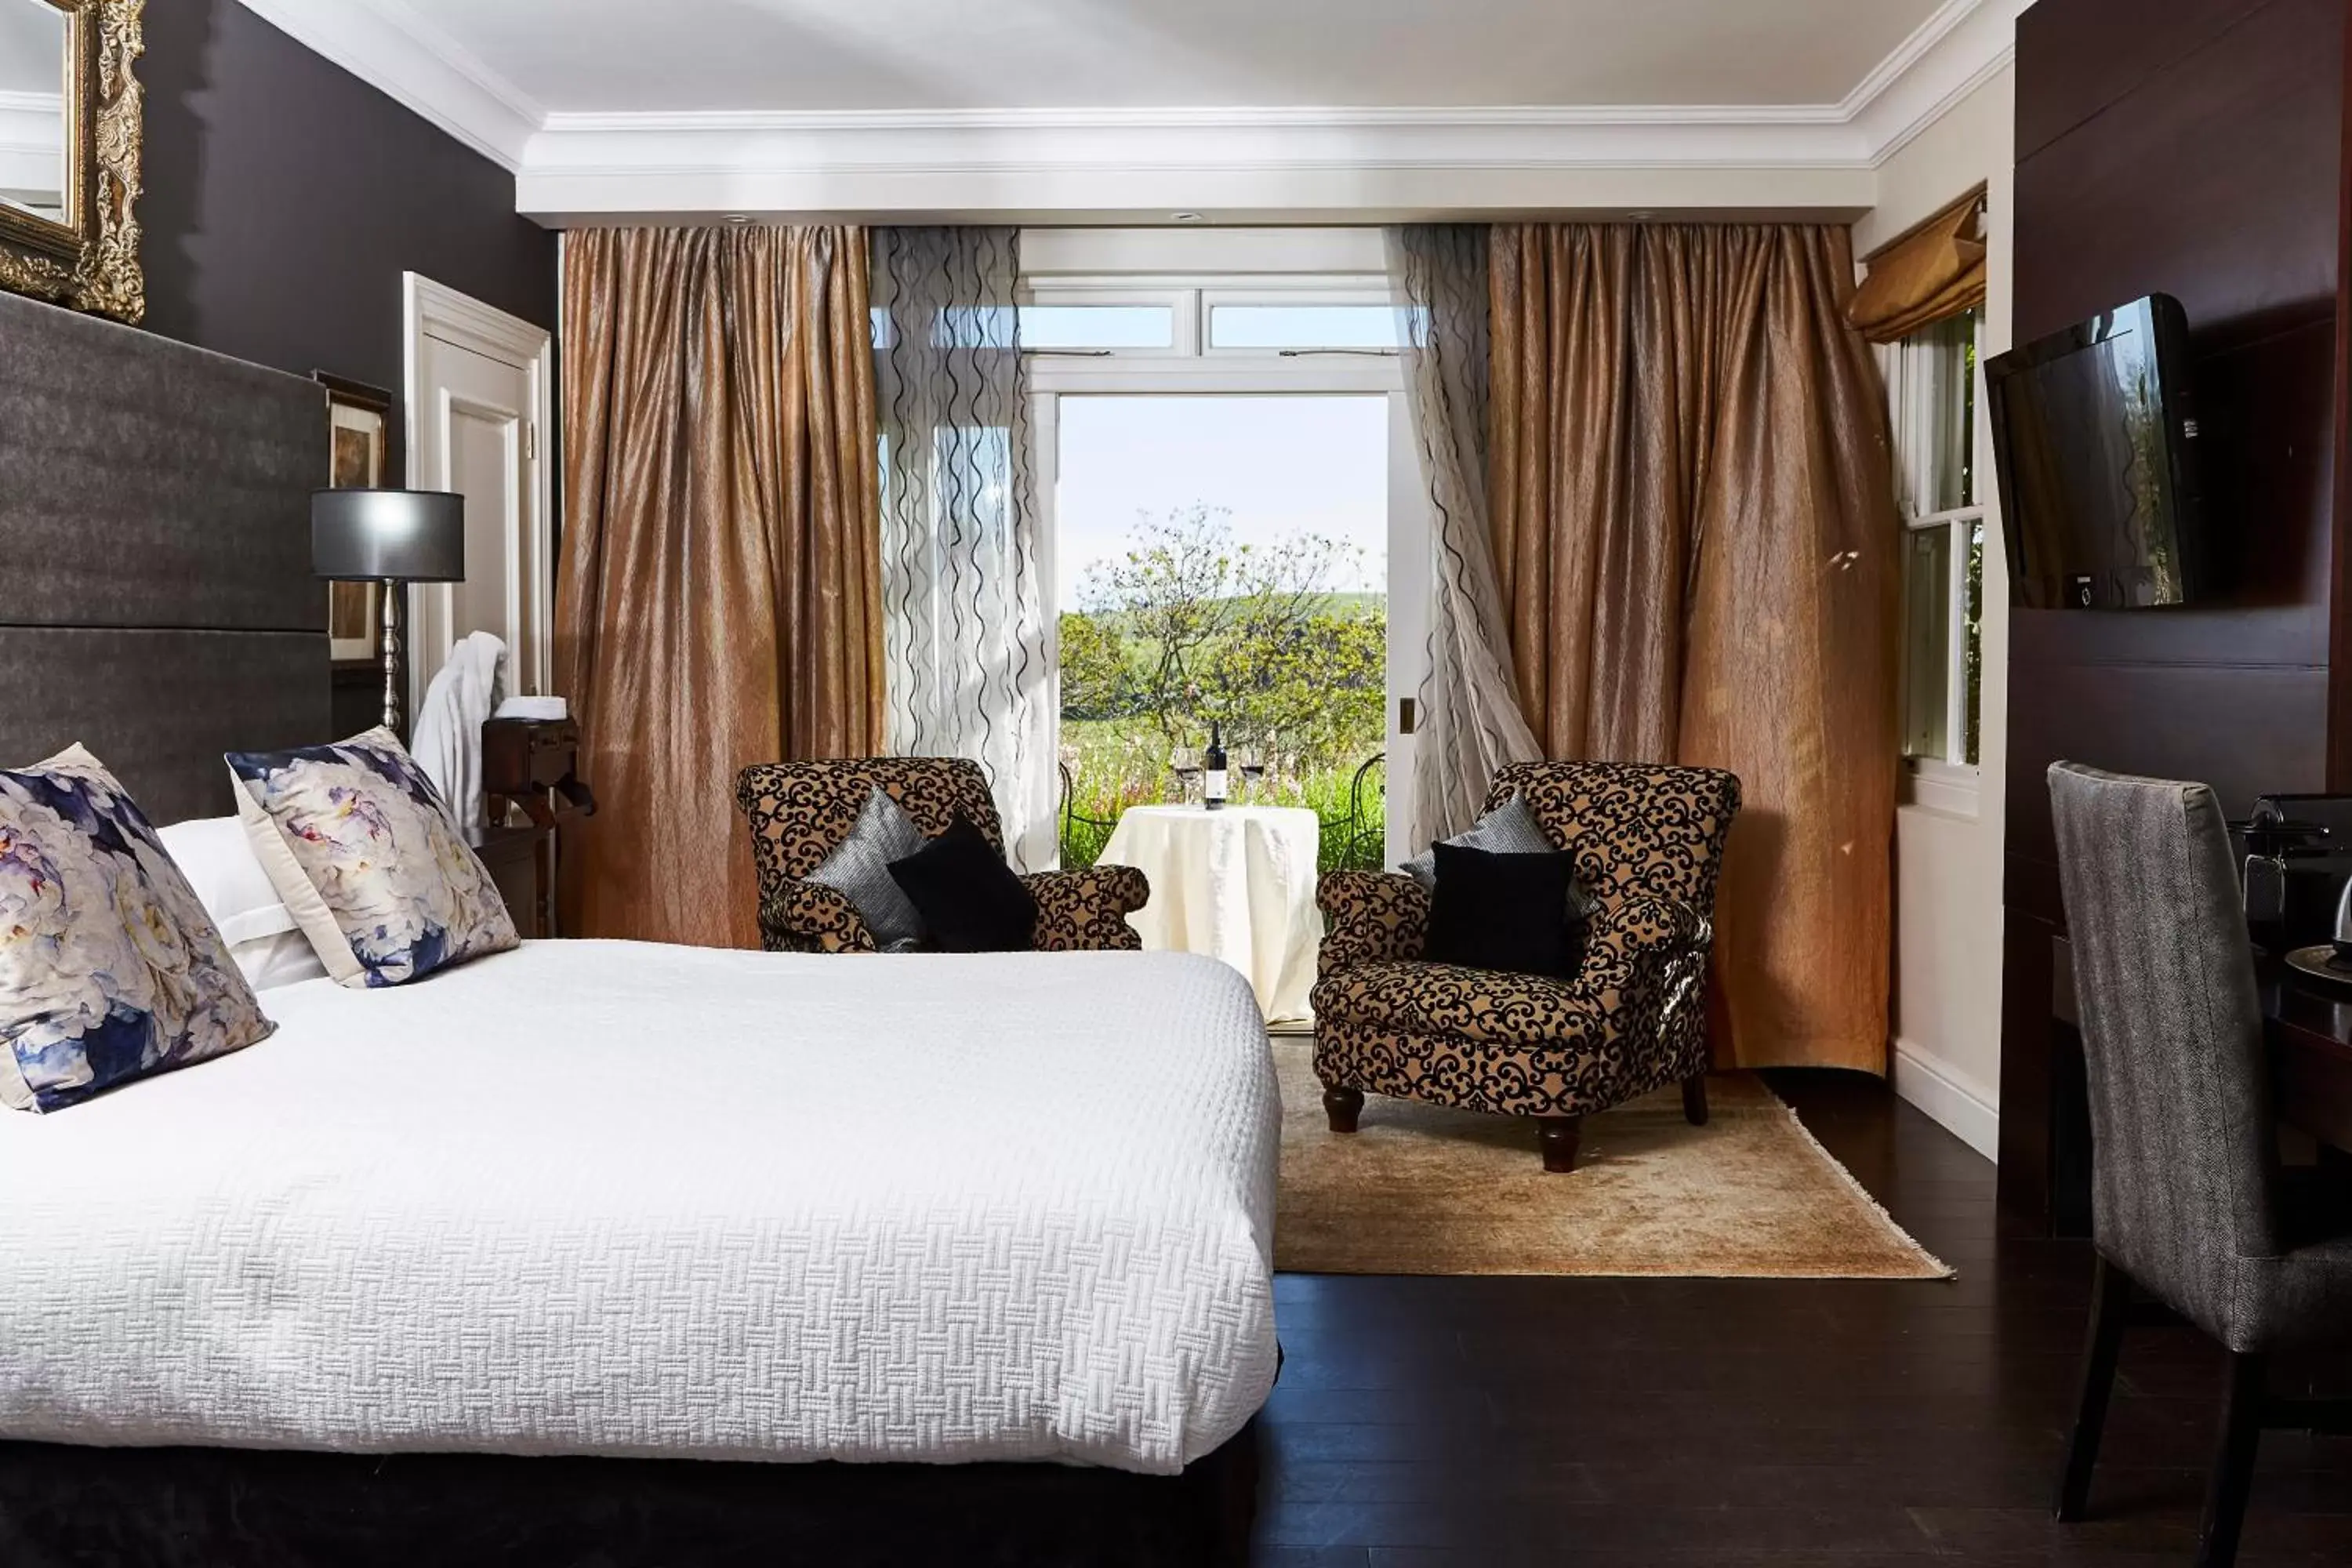 Bedroom in The Devon Valley Hotel